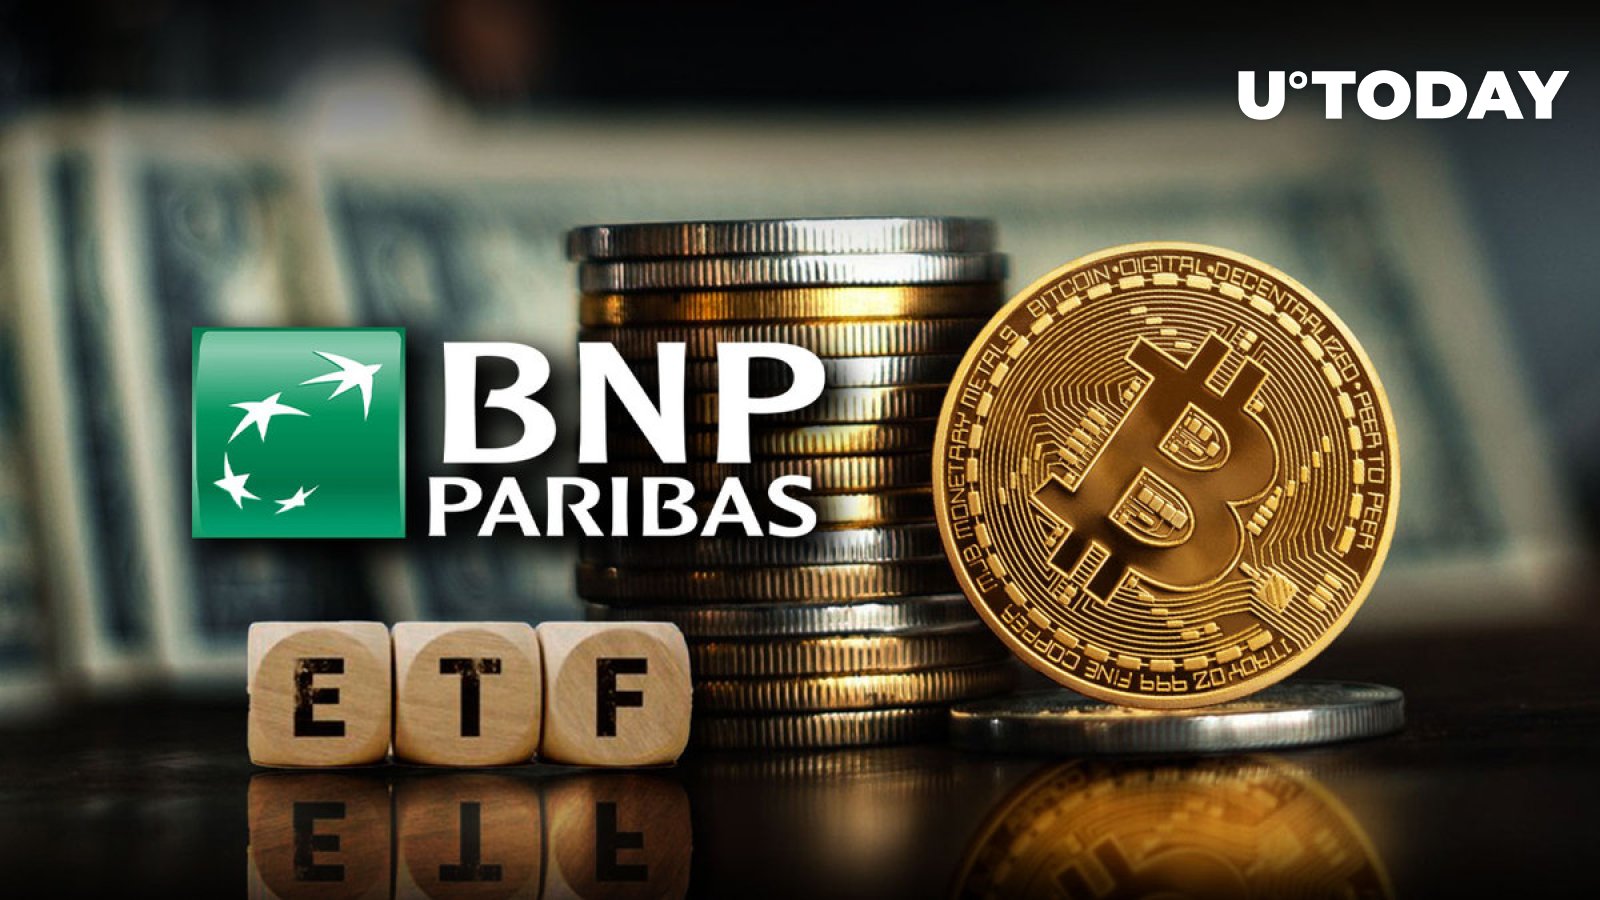 BNP Paribas Ventures into Crypto, Signaling Institutional Embrace of Bitcoin